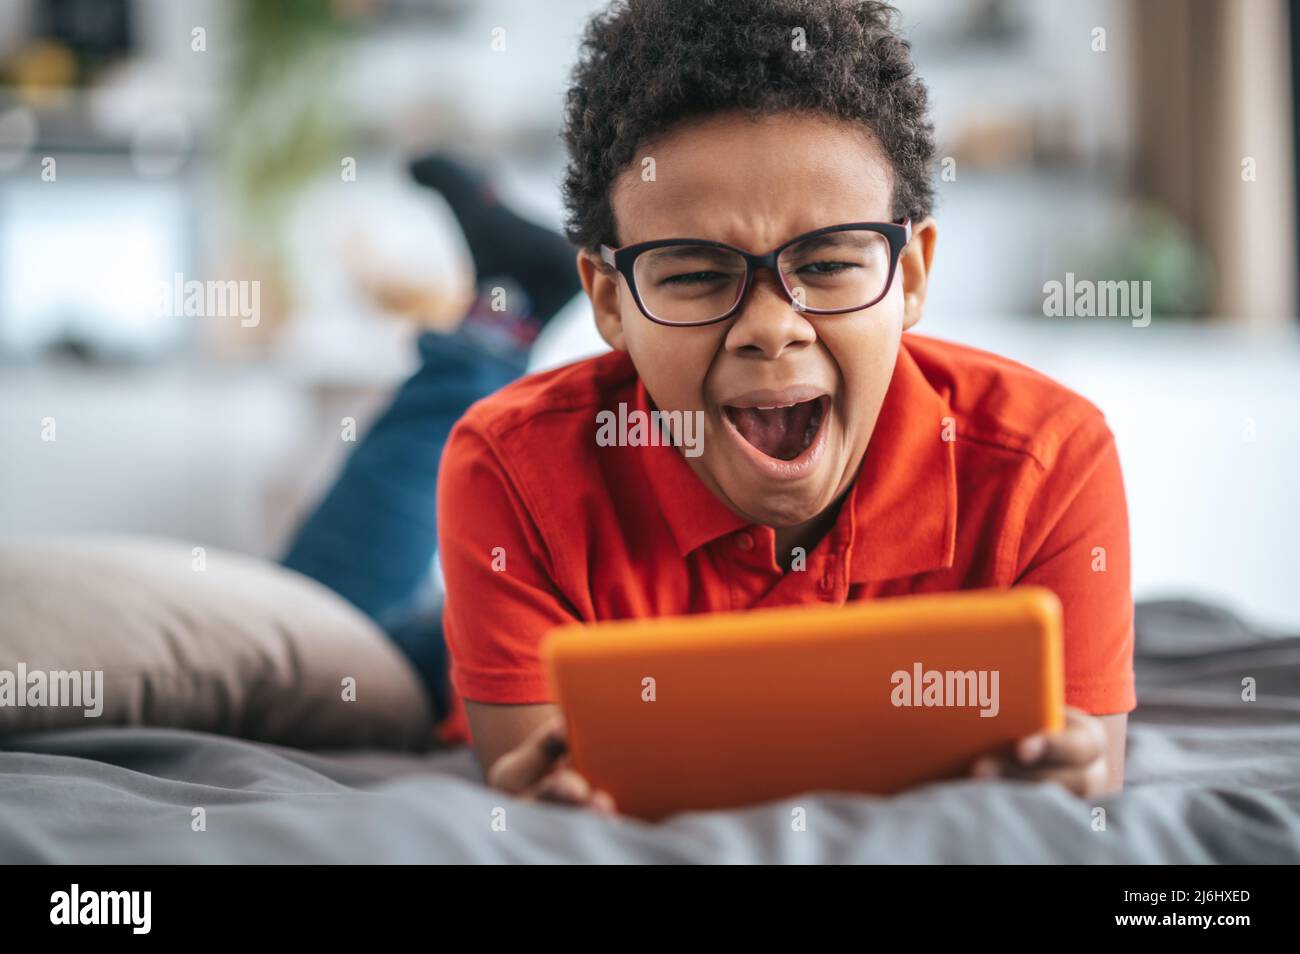 A boy in orange tshirt watching something online and yawning Stock Photo